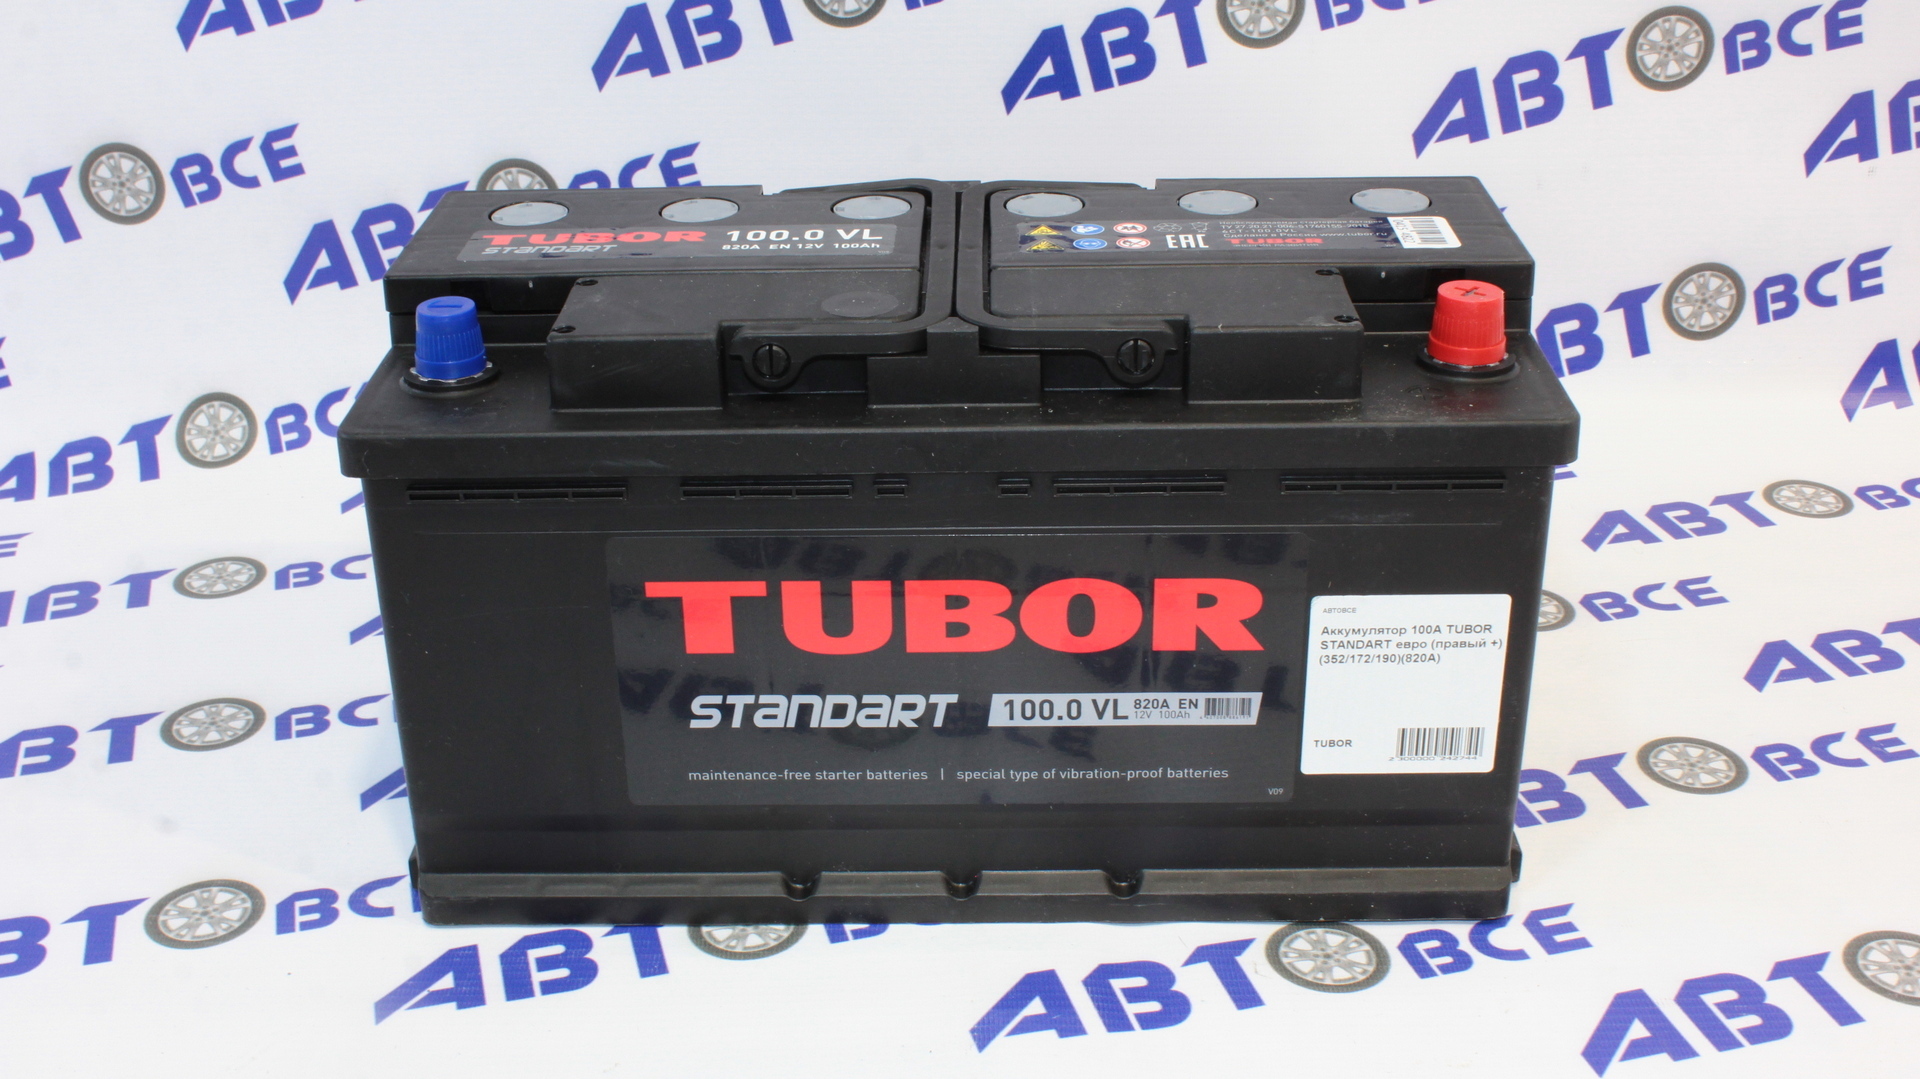 Tubor Classic 100 аккумулятор. Правый аккум. АКБ a2337. АКБ 115.